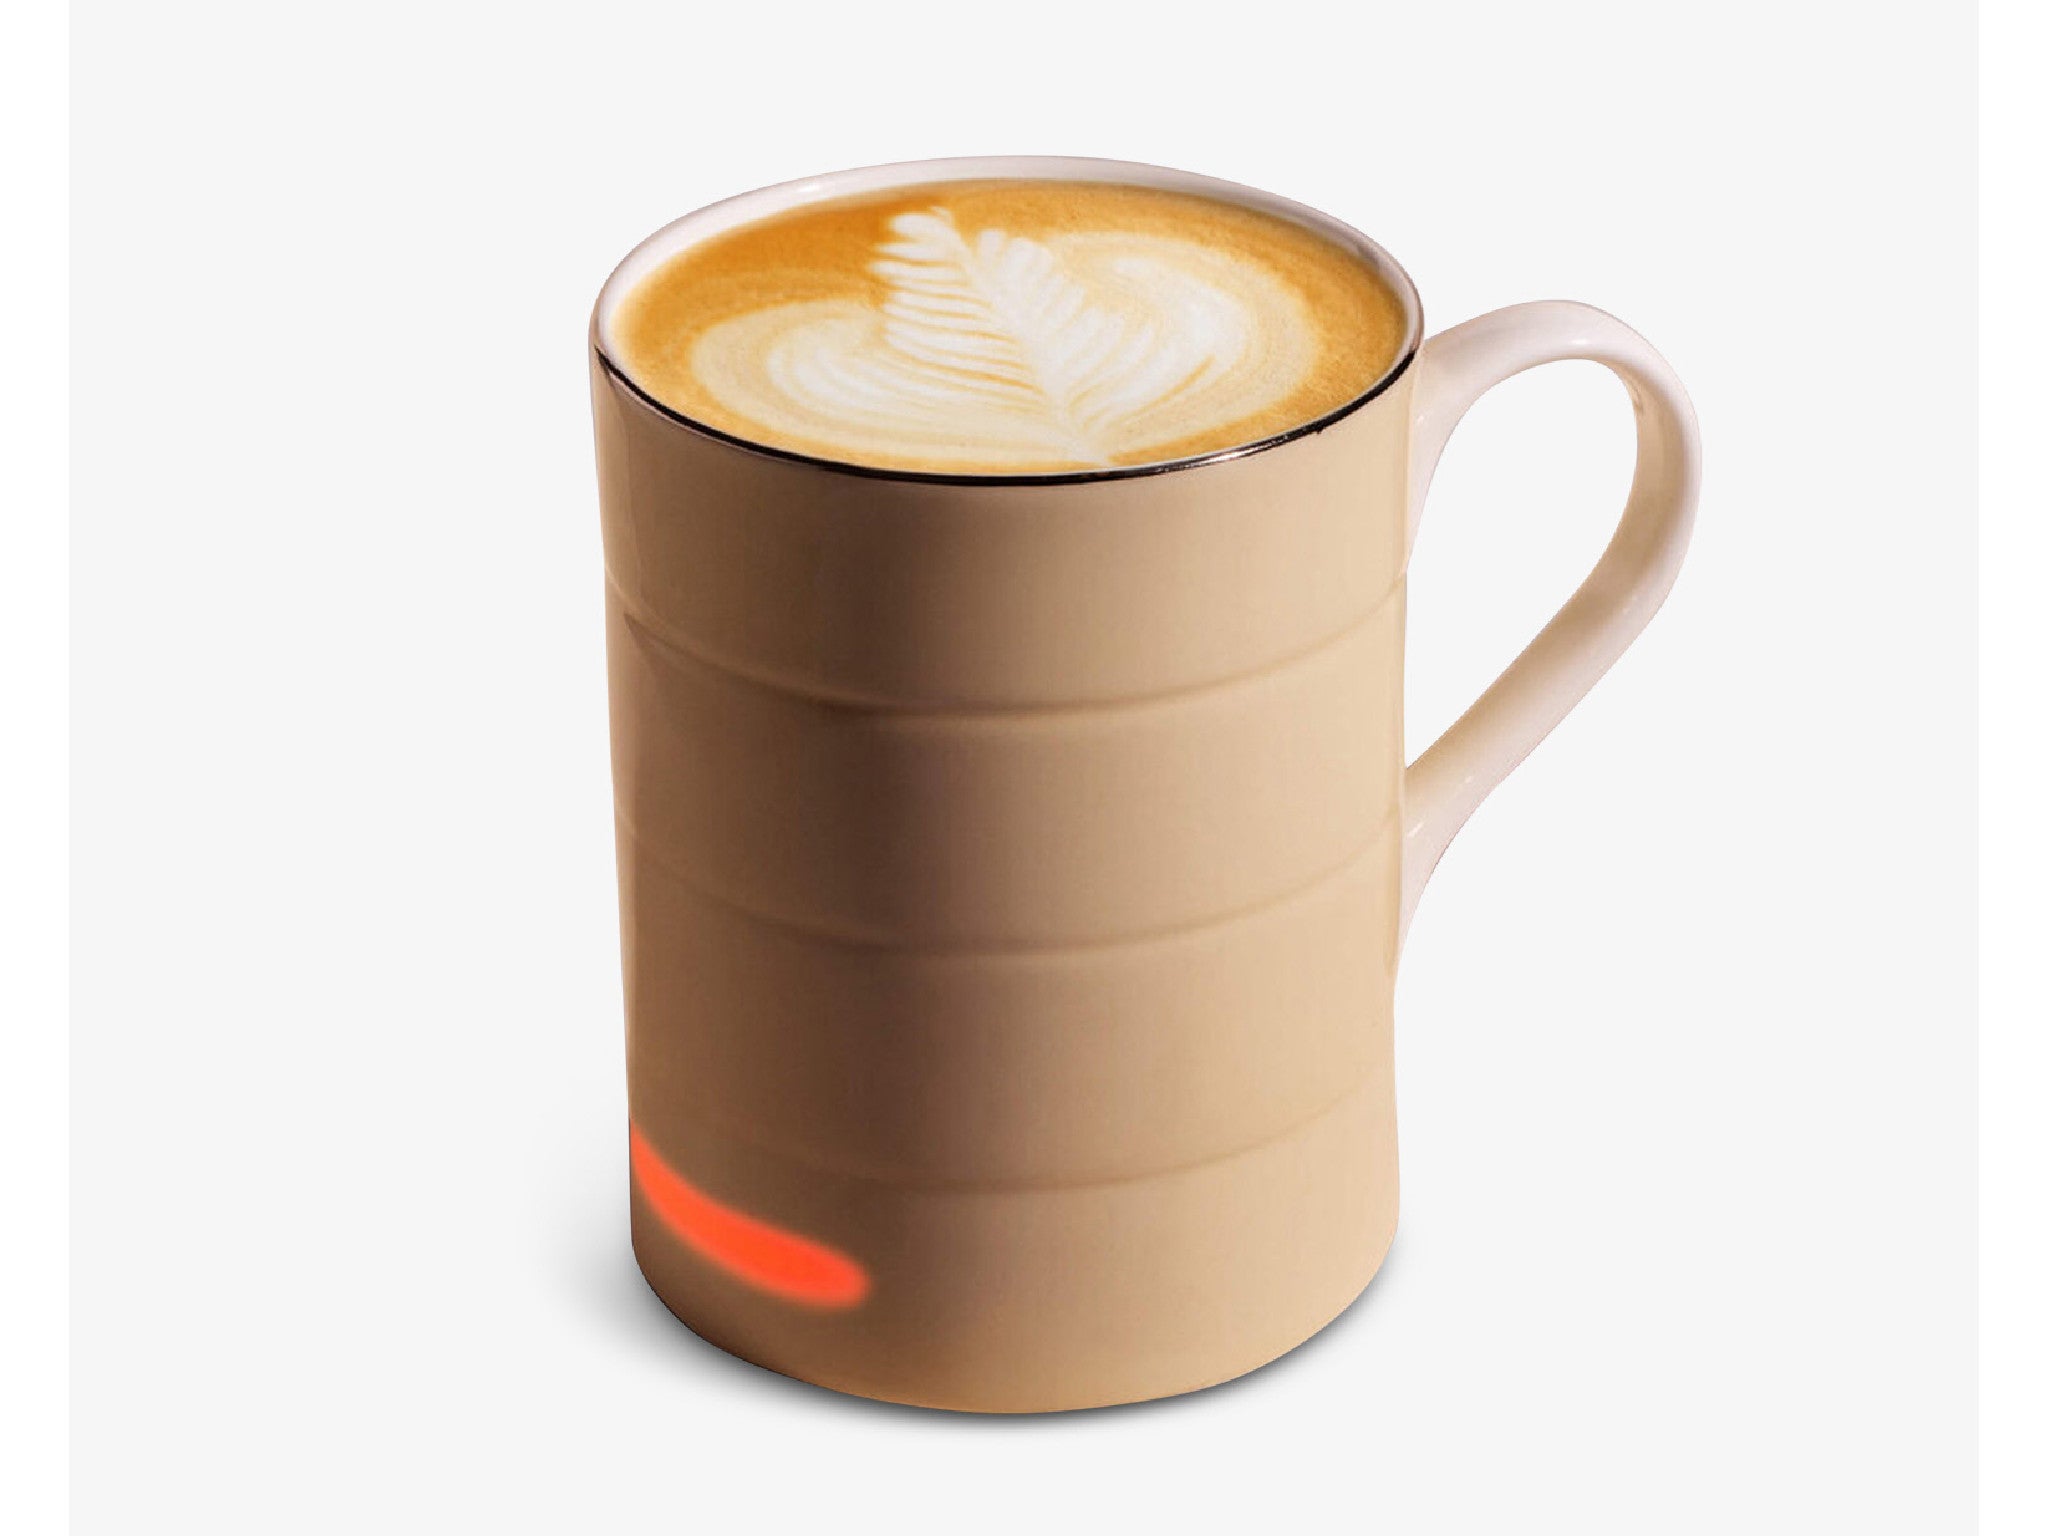 The Tech Bar self heating smart mug